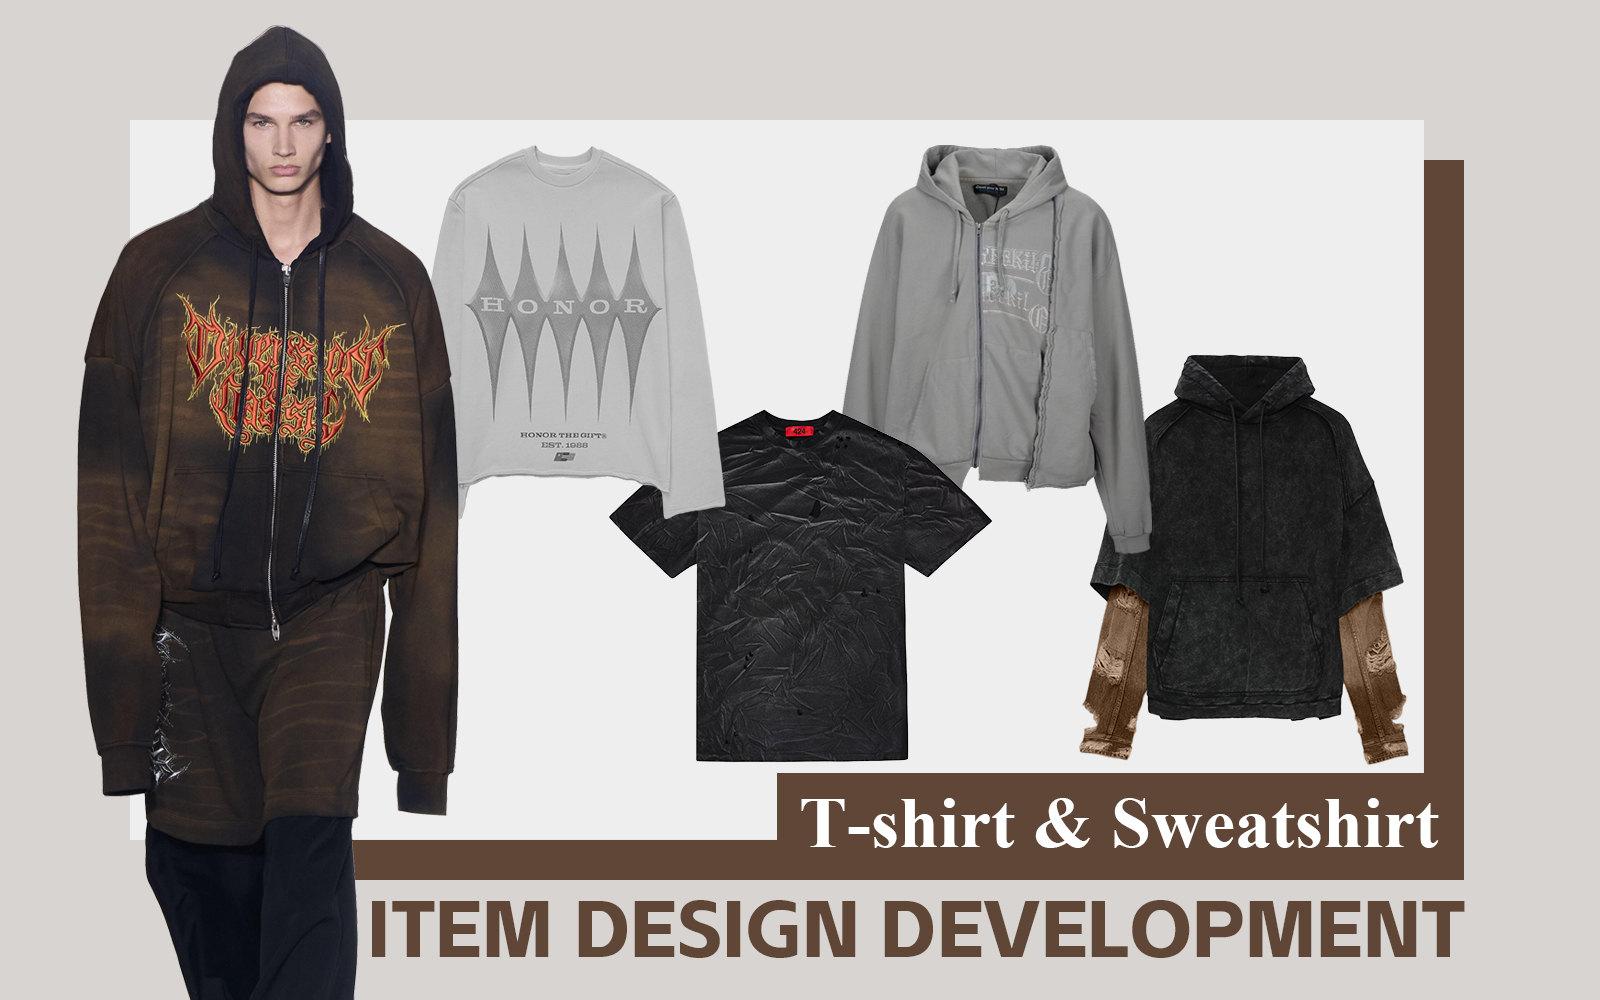 Street Fashion -- The Design Development of Men's T-shirt & Sweatshirt